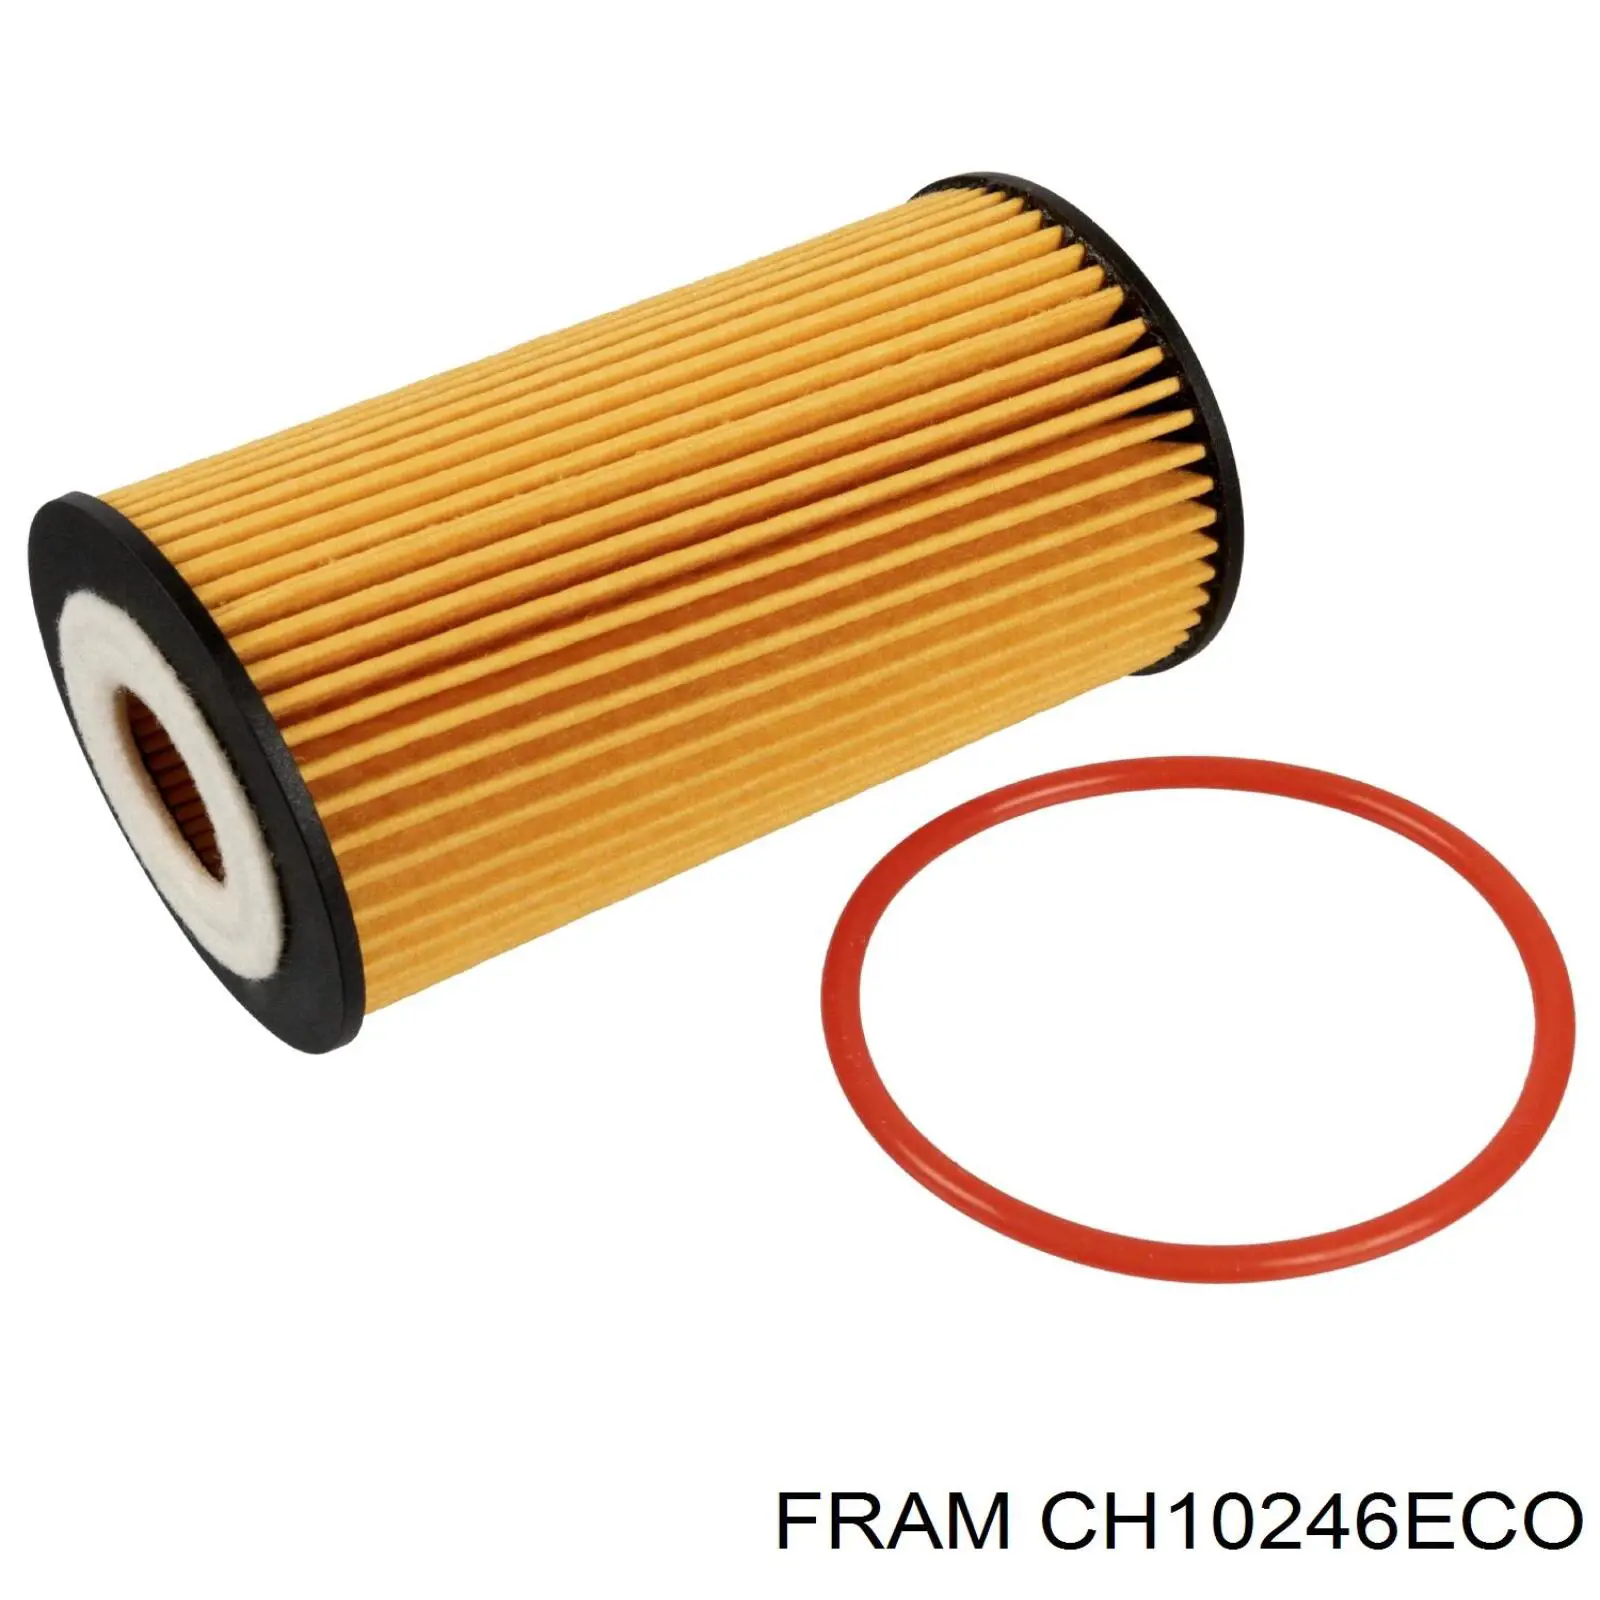 CH10246ECO Fram filtro de aceite